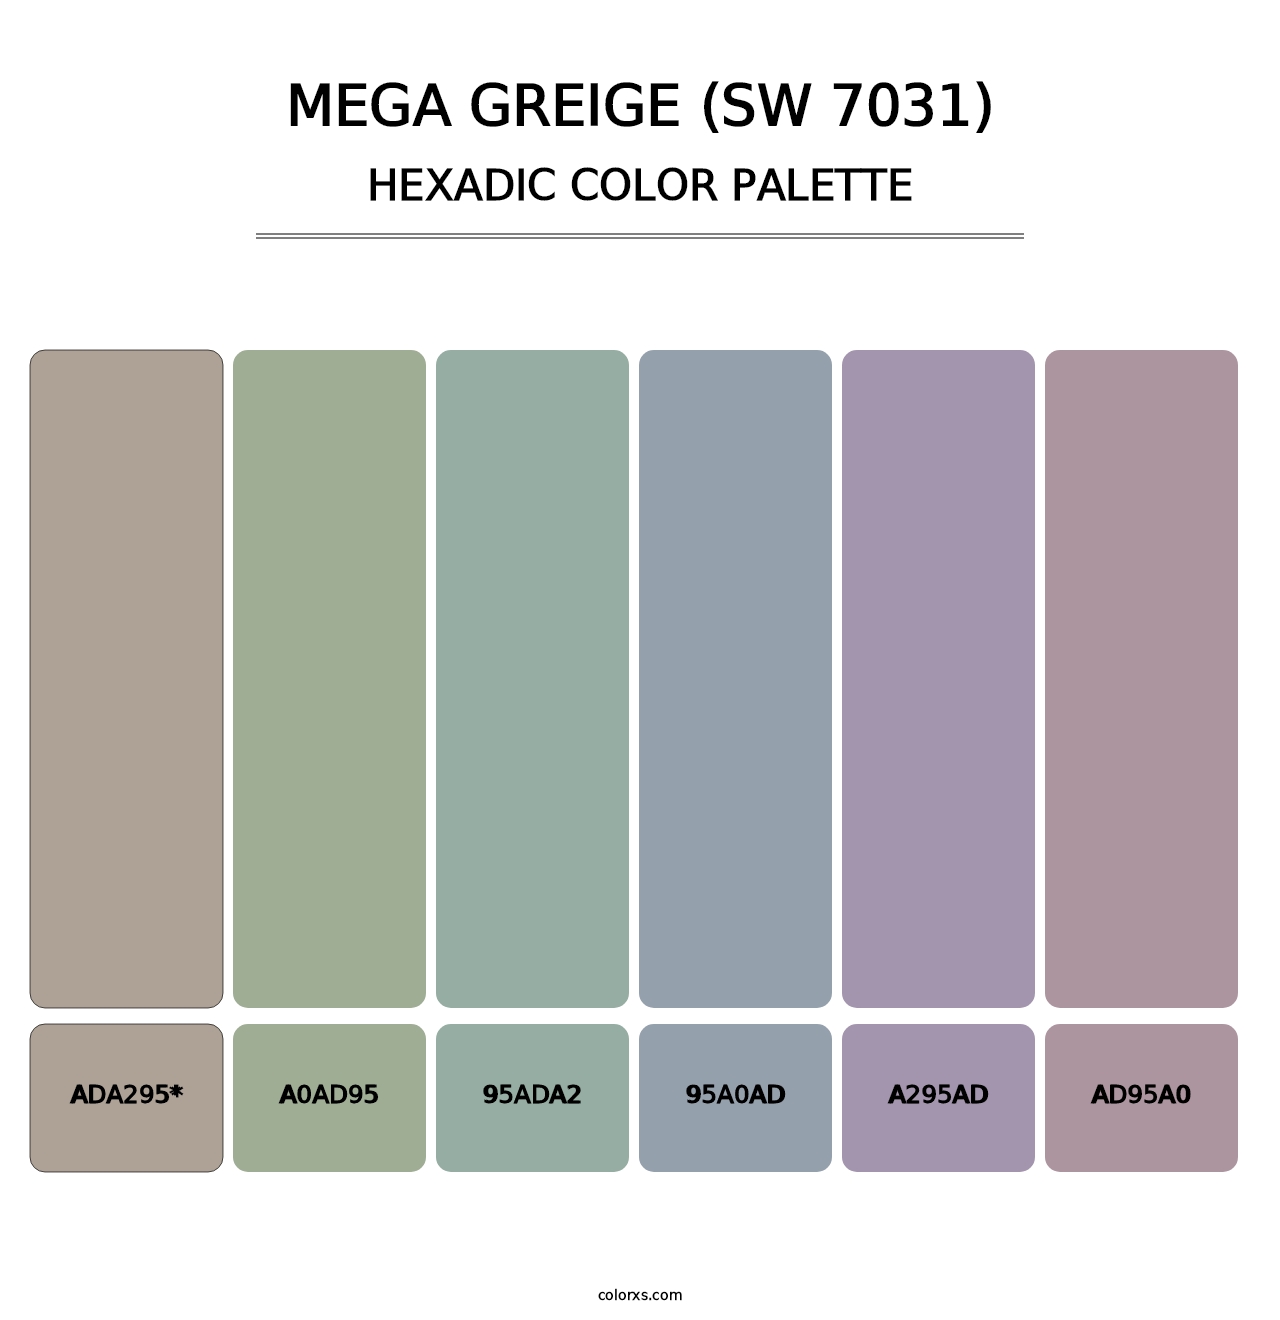 Mega Greige (SW 7031) - Hexadic Color Palette